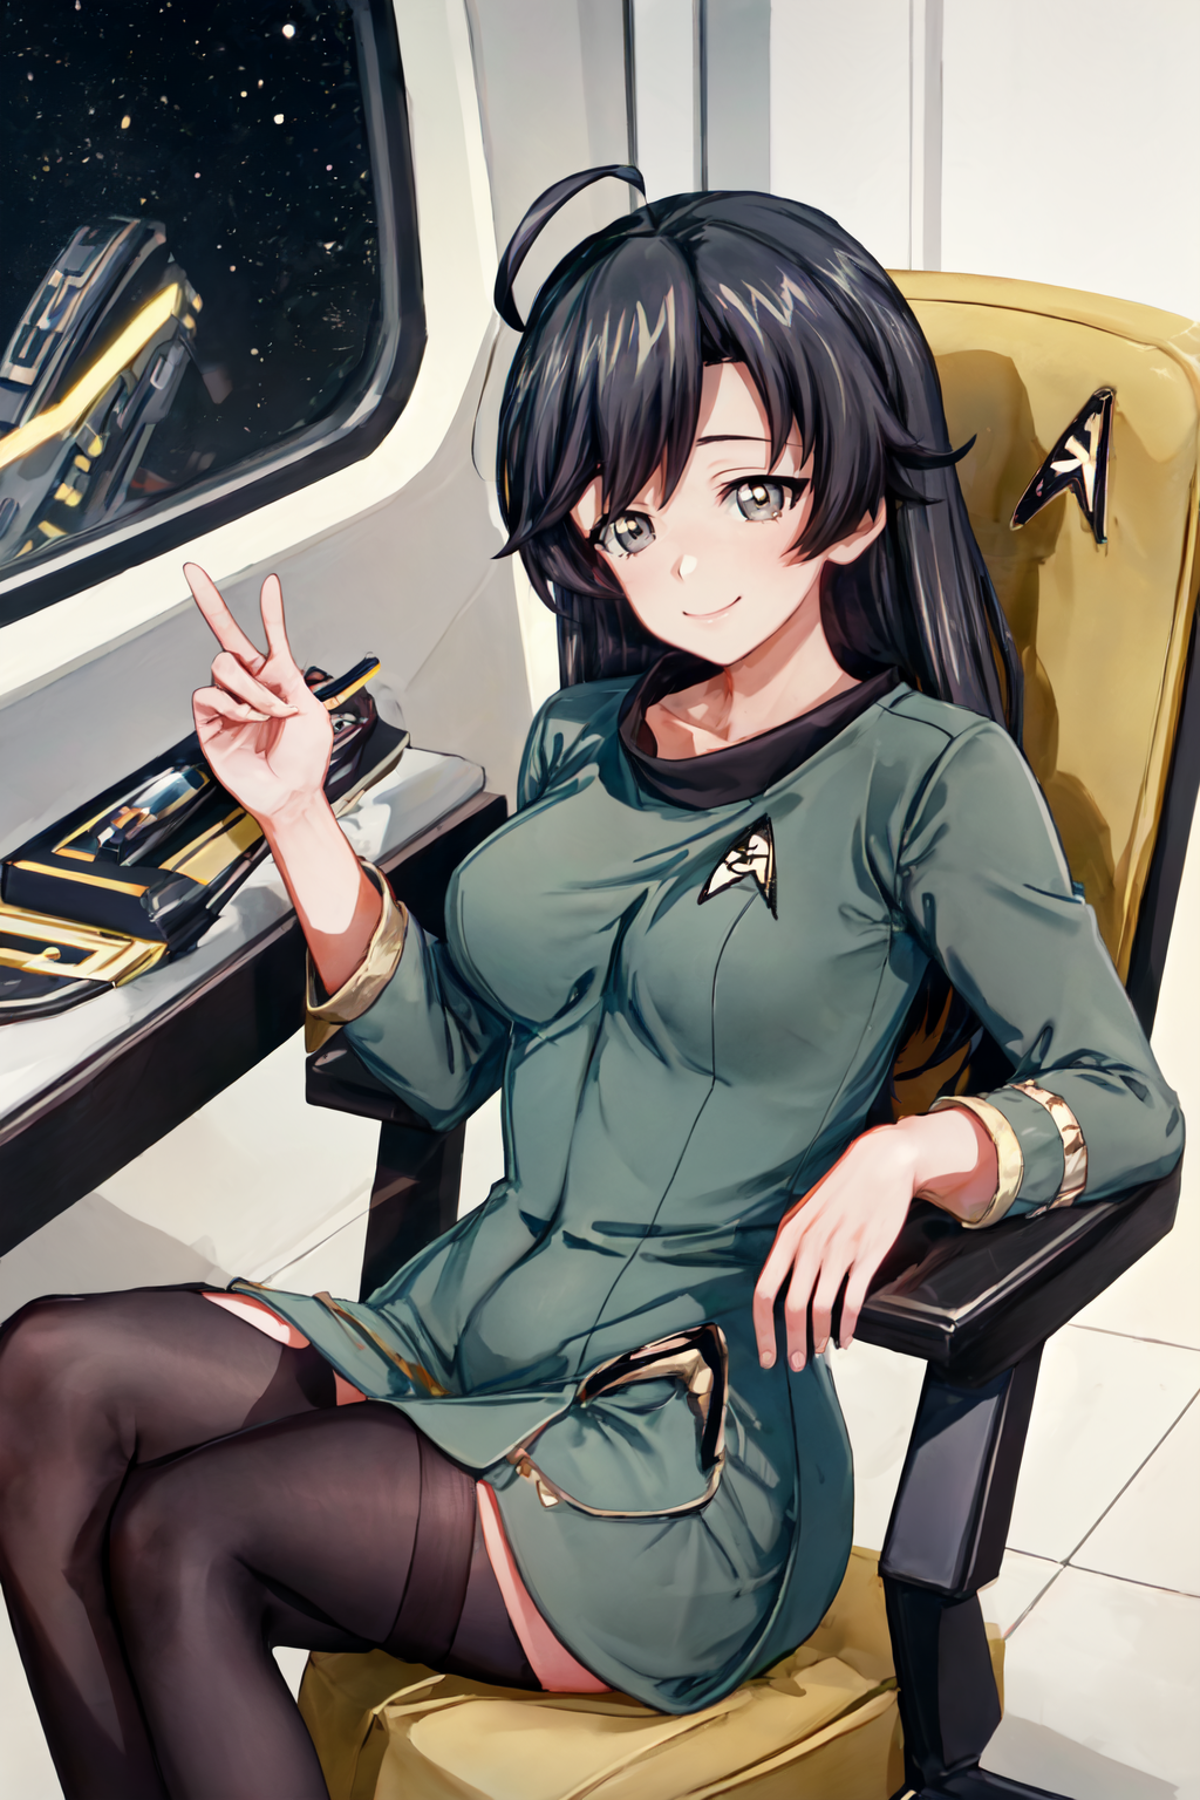 Star Trek TOS uniforms image by anonymoose1234